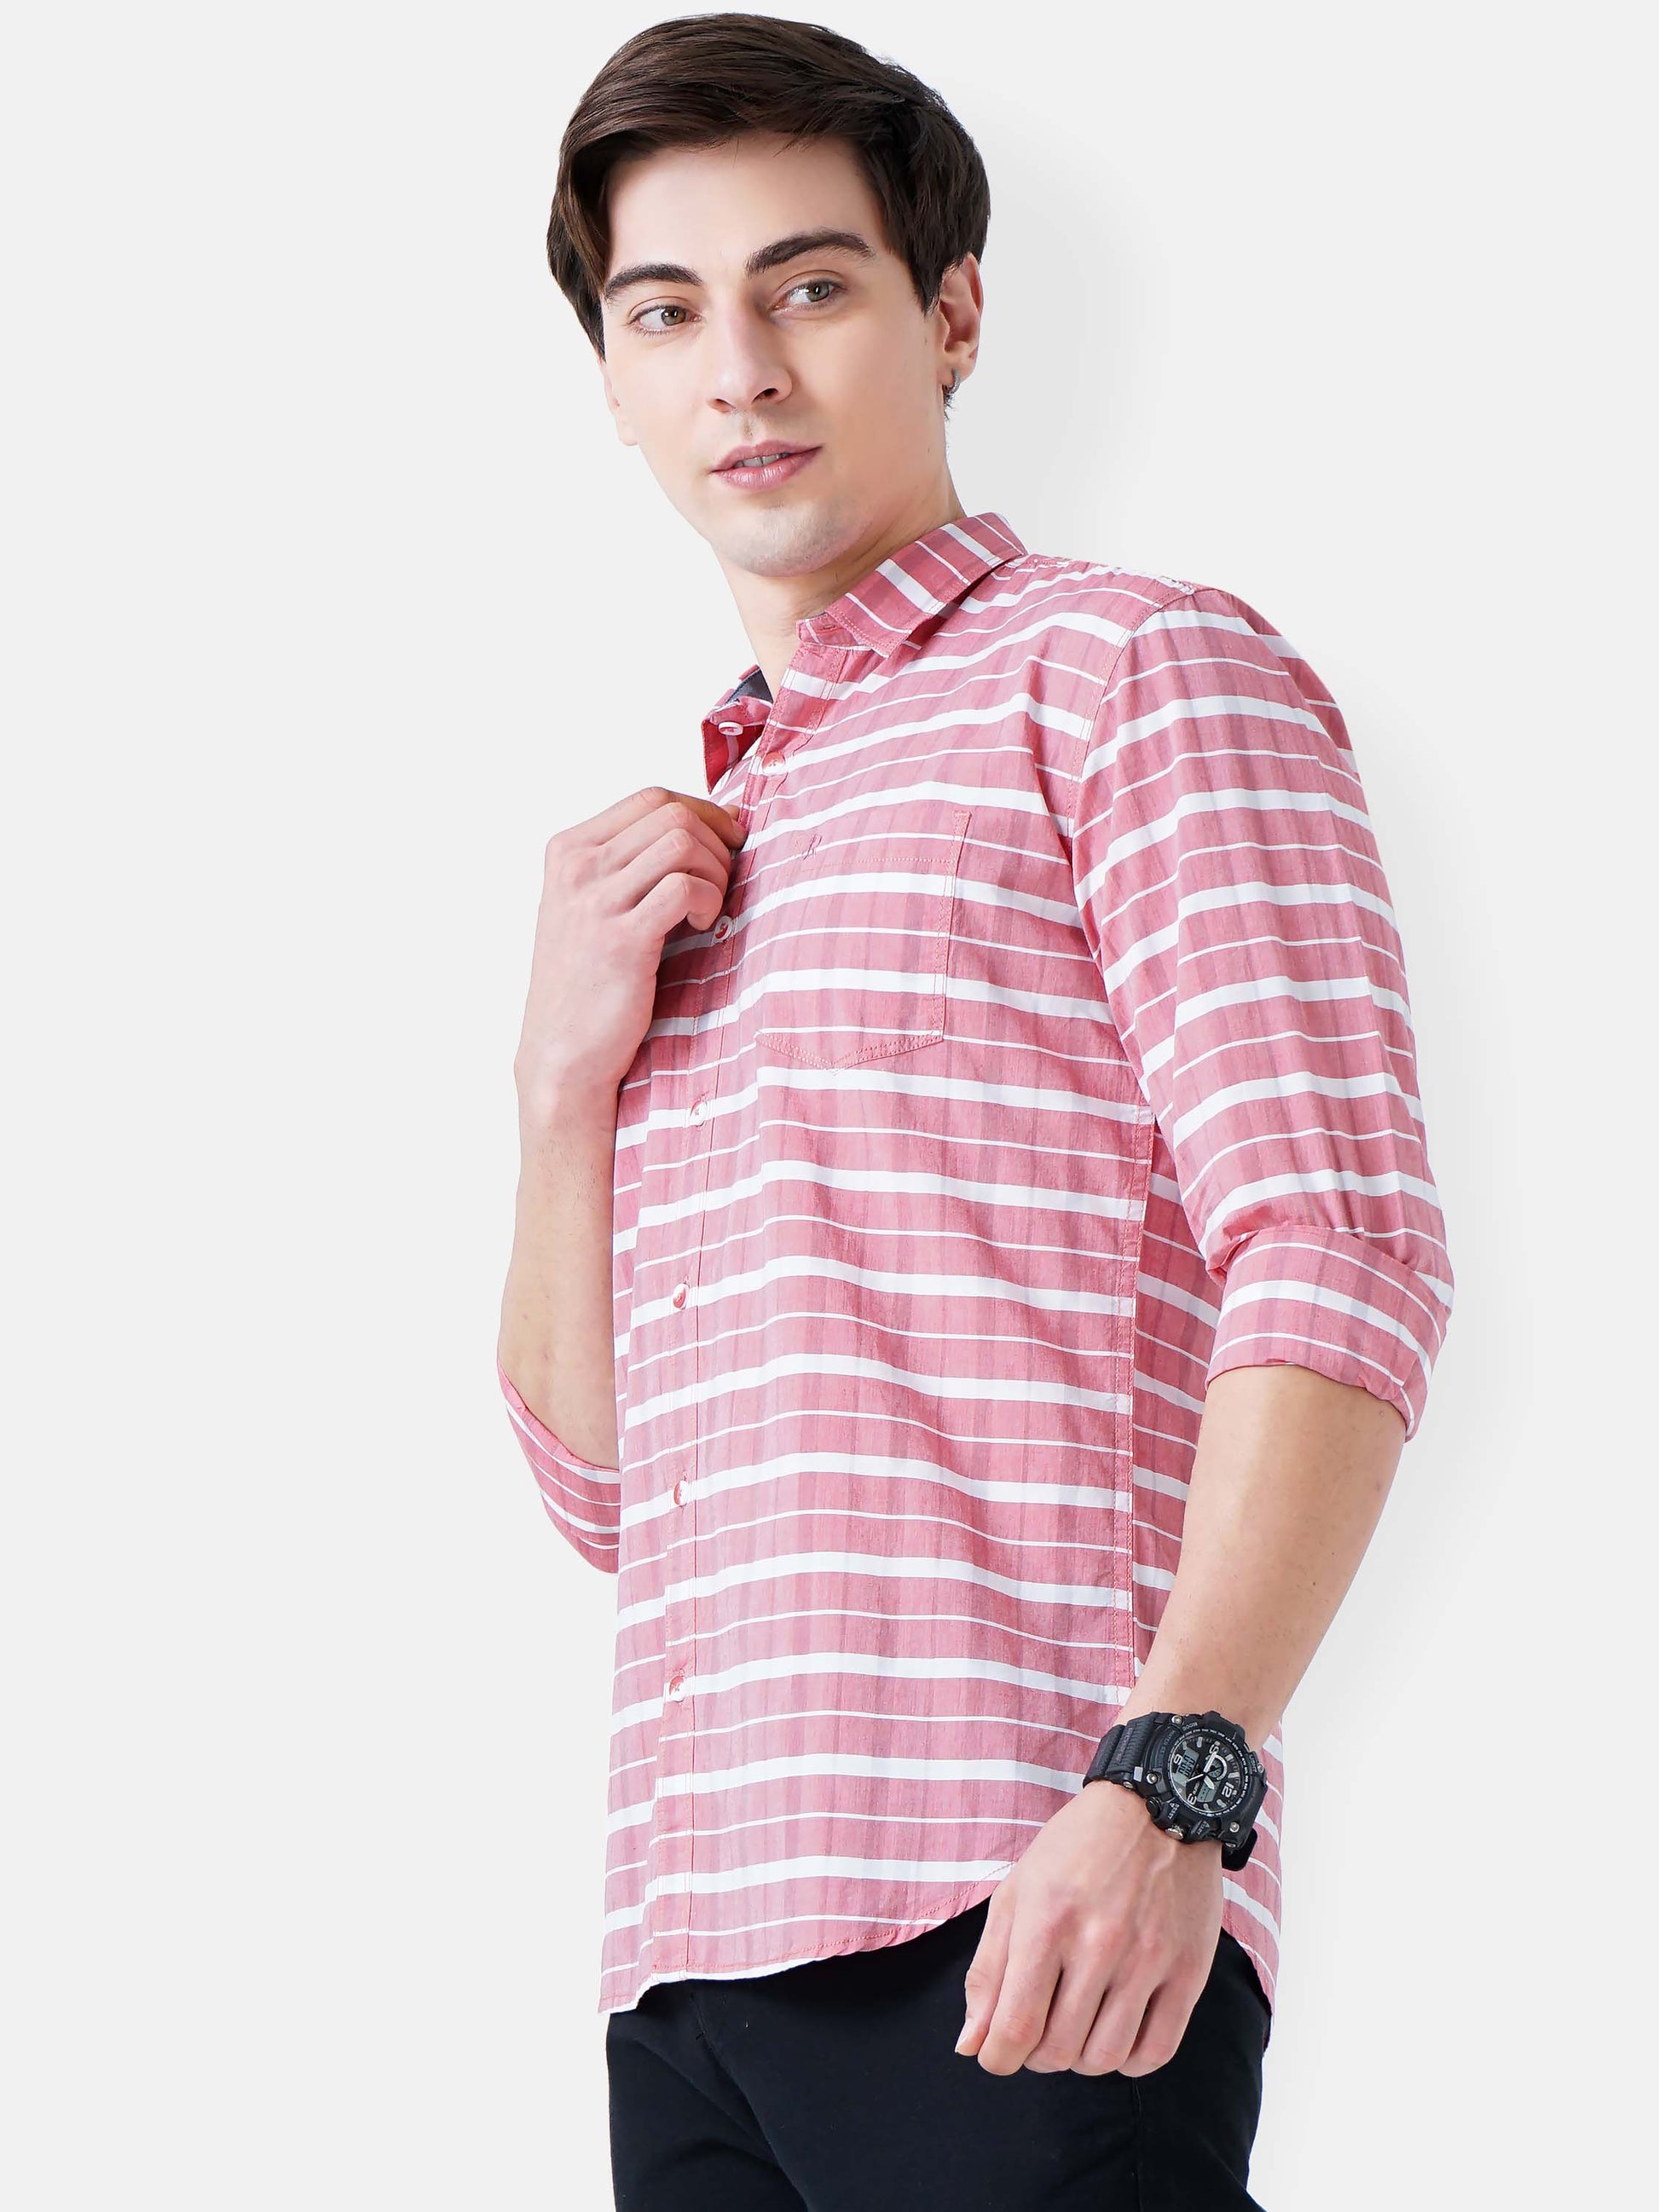 Dusty Rose Stripe Shirt